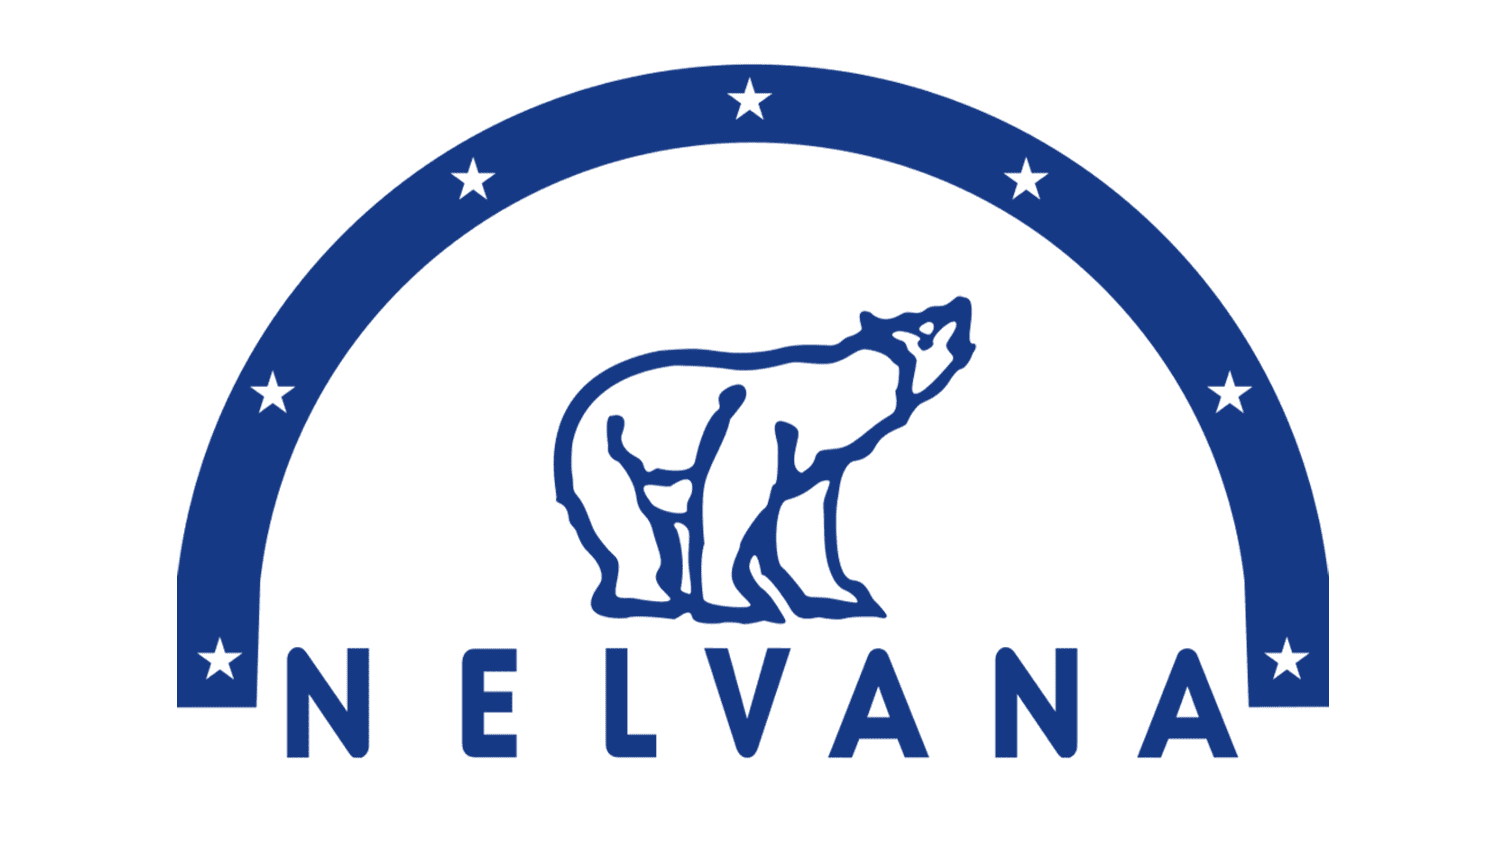 Nelvana Logo 1985